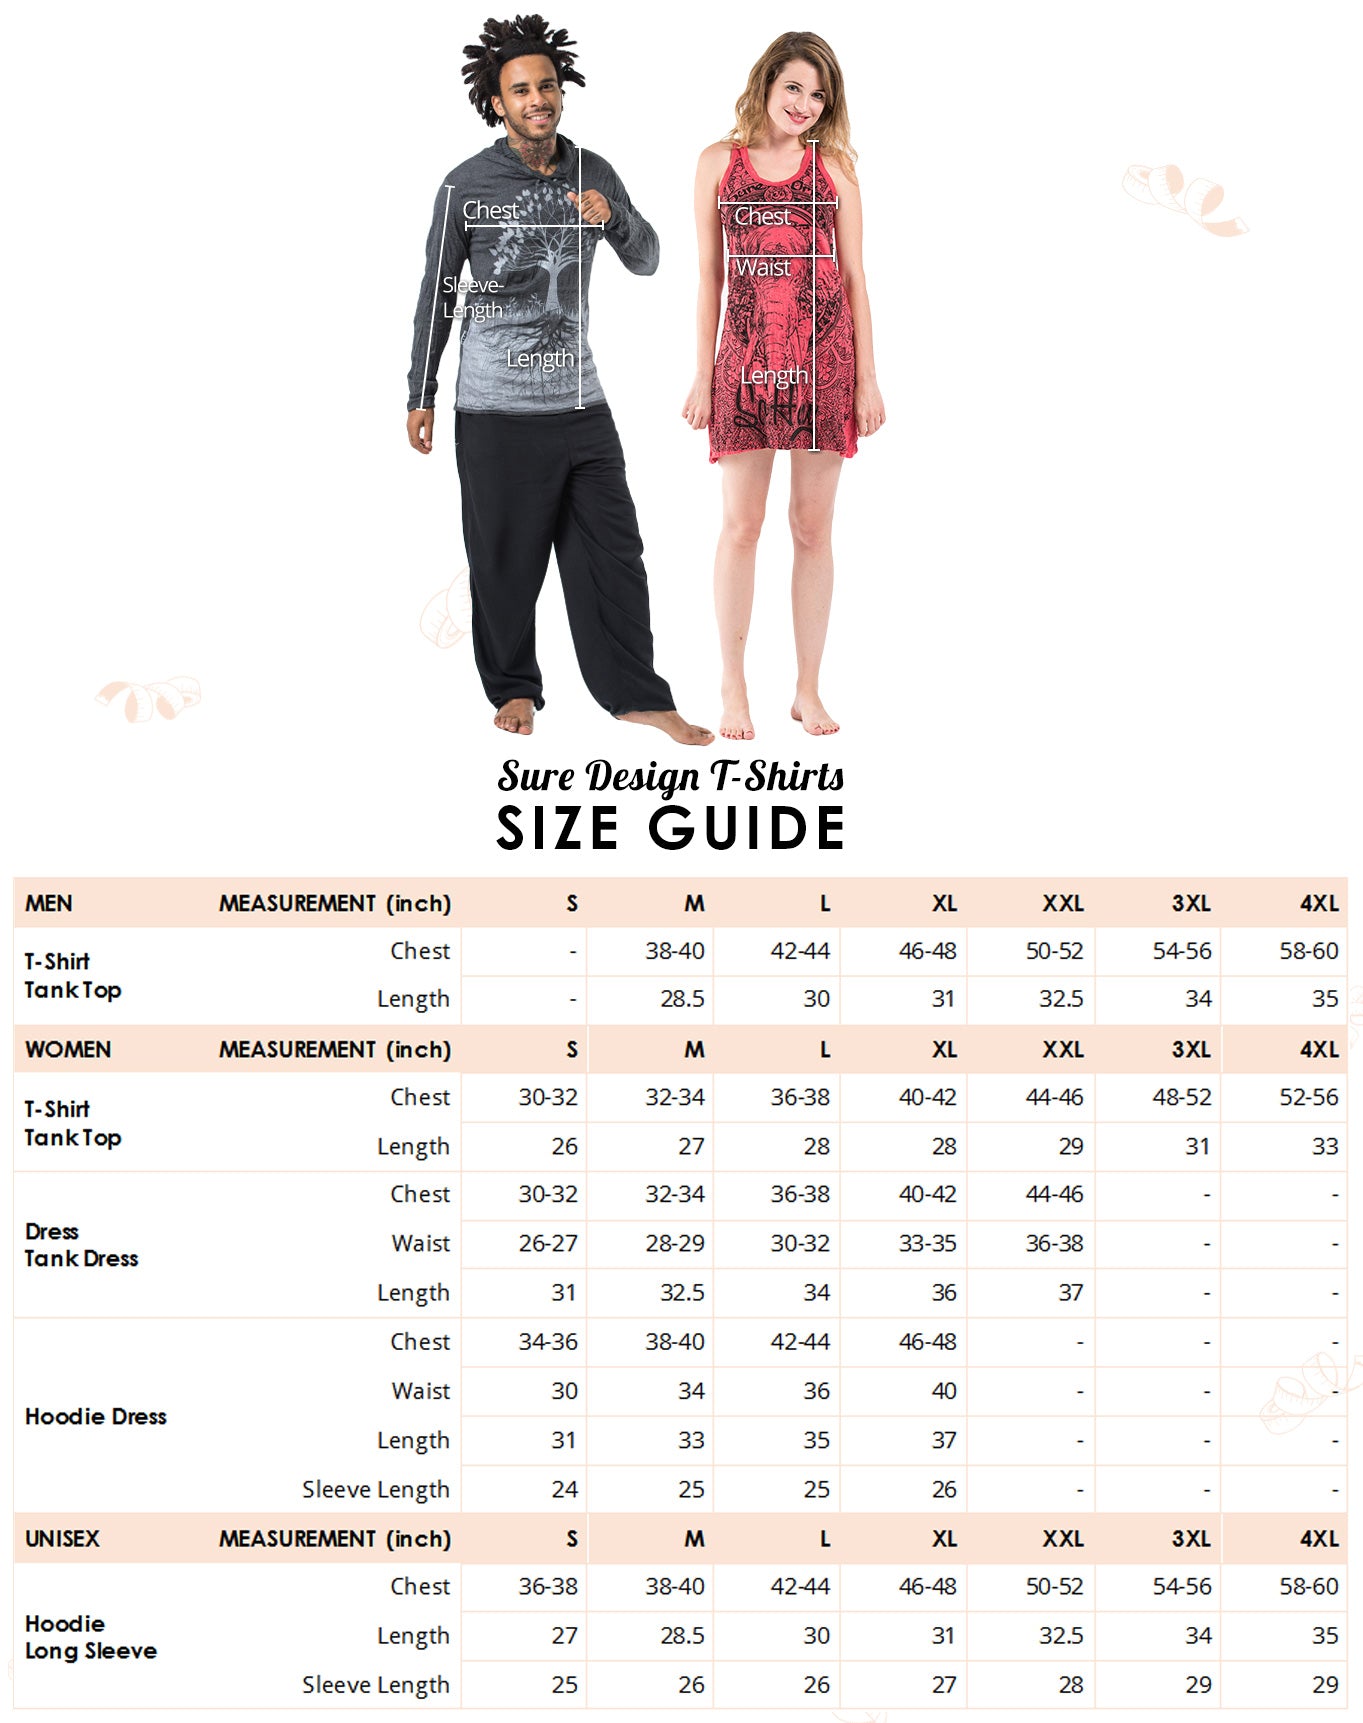 Sure Design Tshirts Size Guide